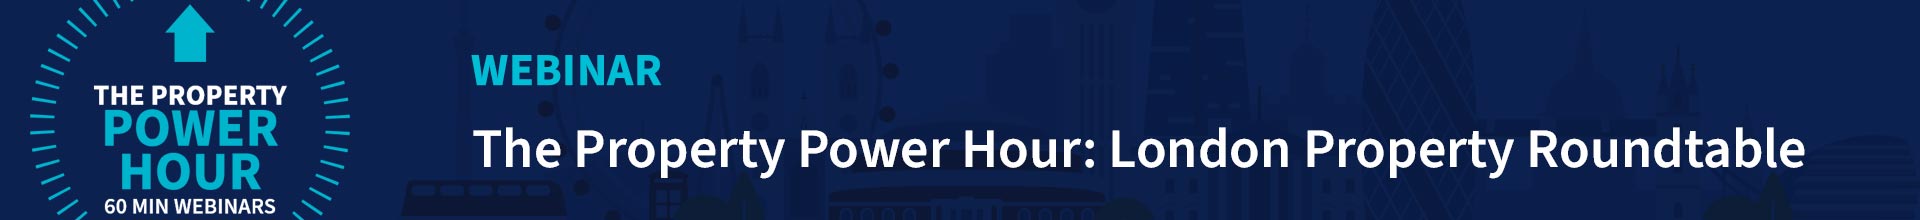 London property roundtable Power Hour webinar